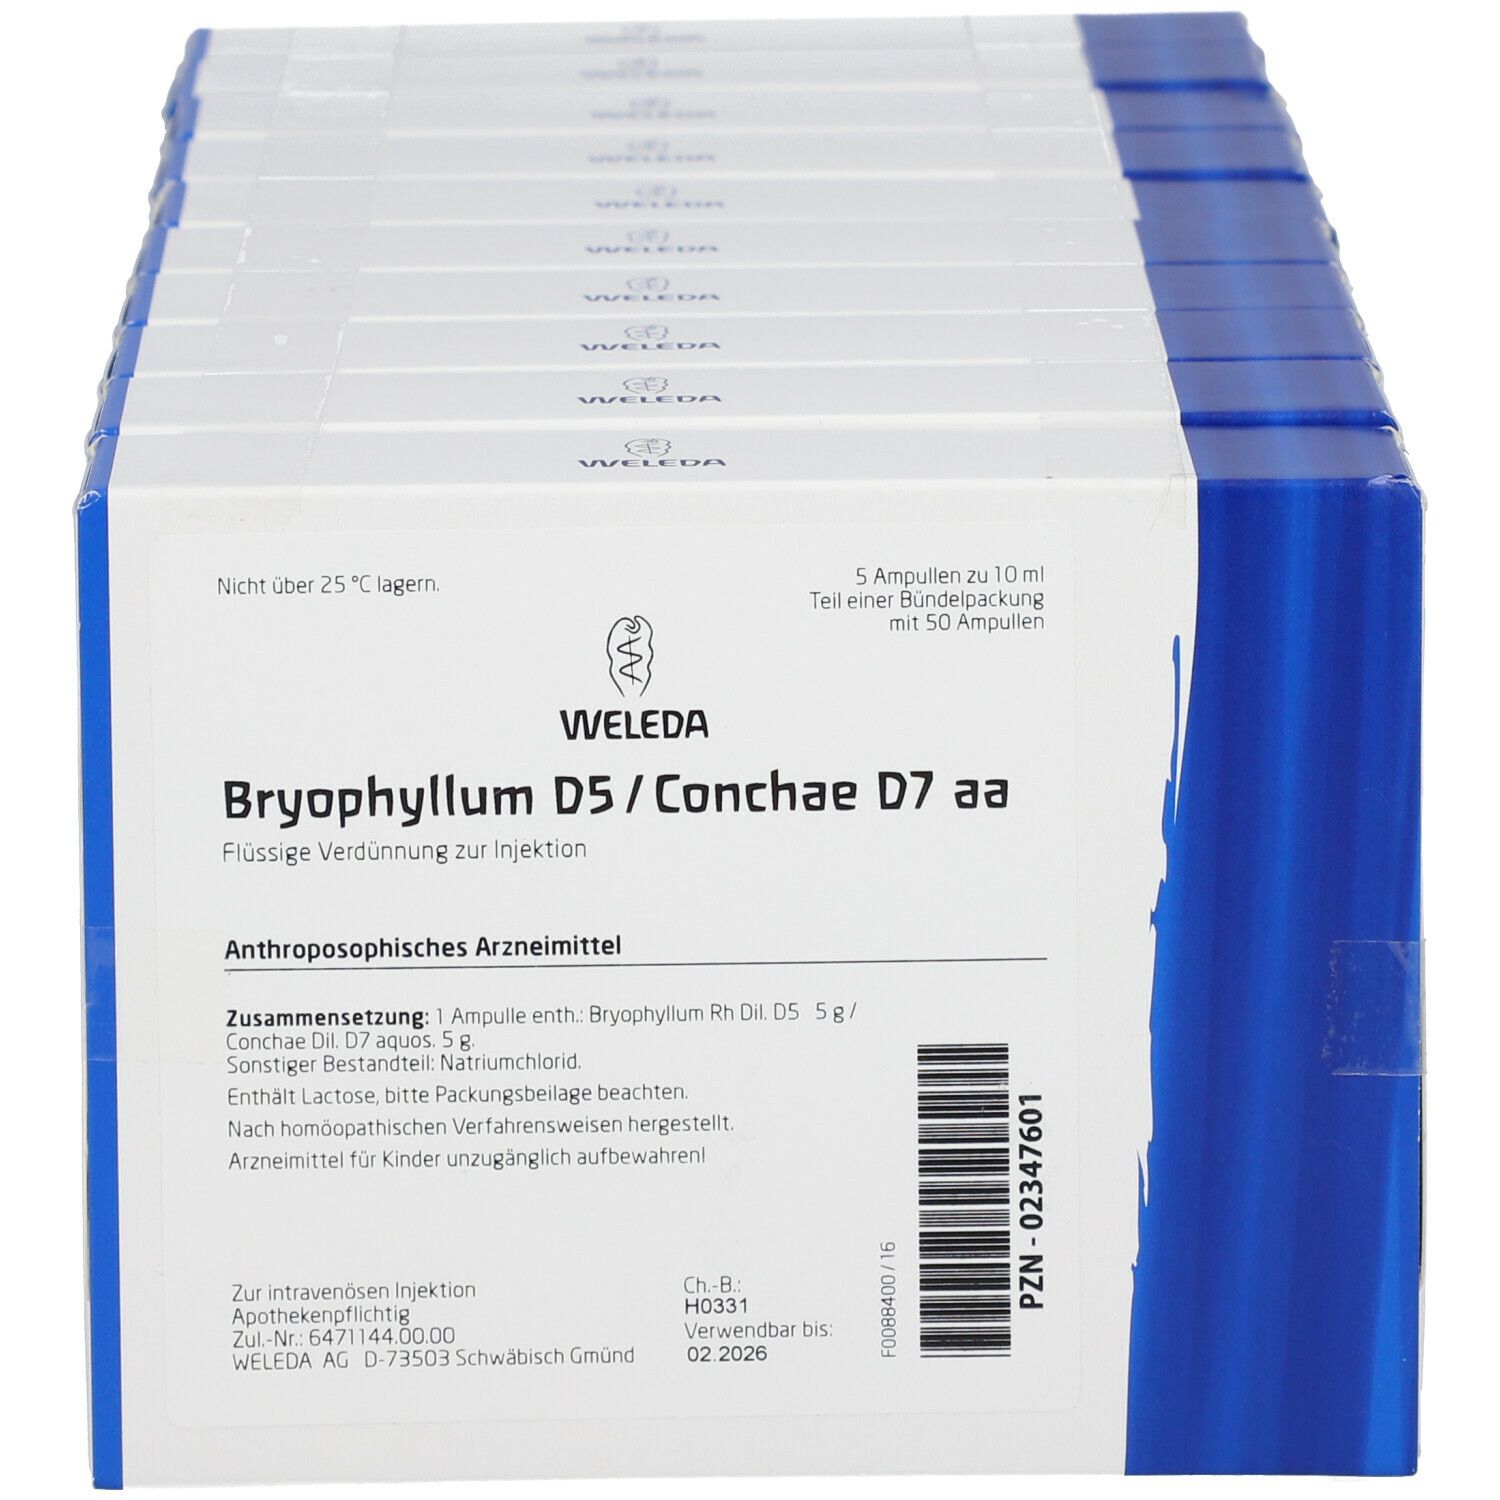 Bryophyllum D5 / Conchae D7